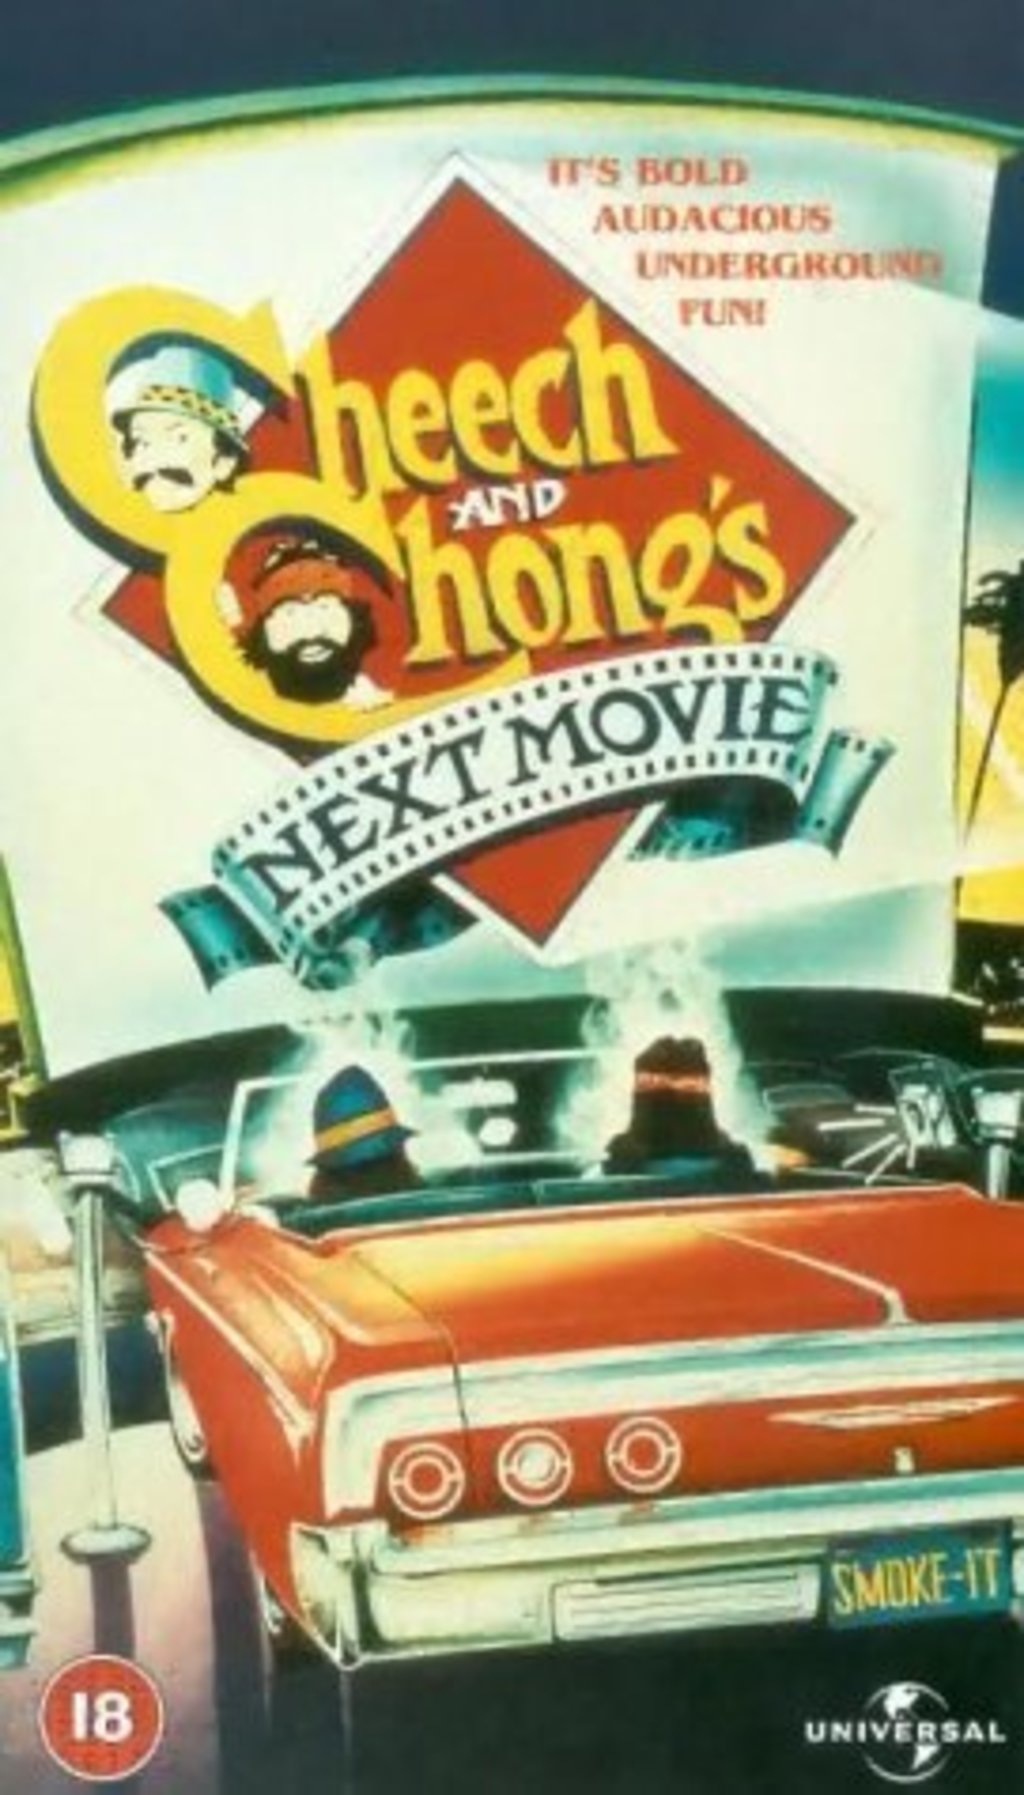 Cheech And Chong's Next Movie Photos (6/8) .